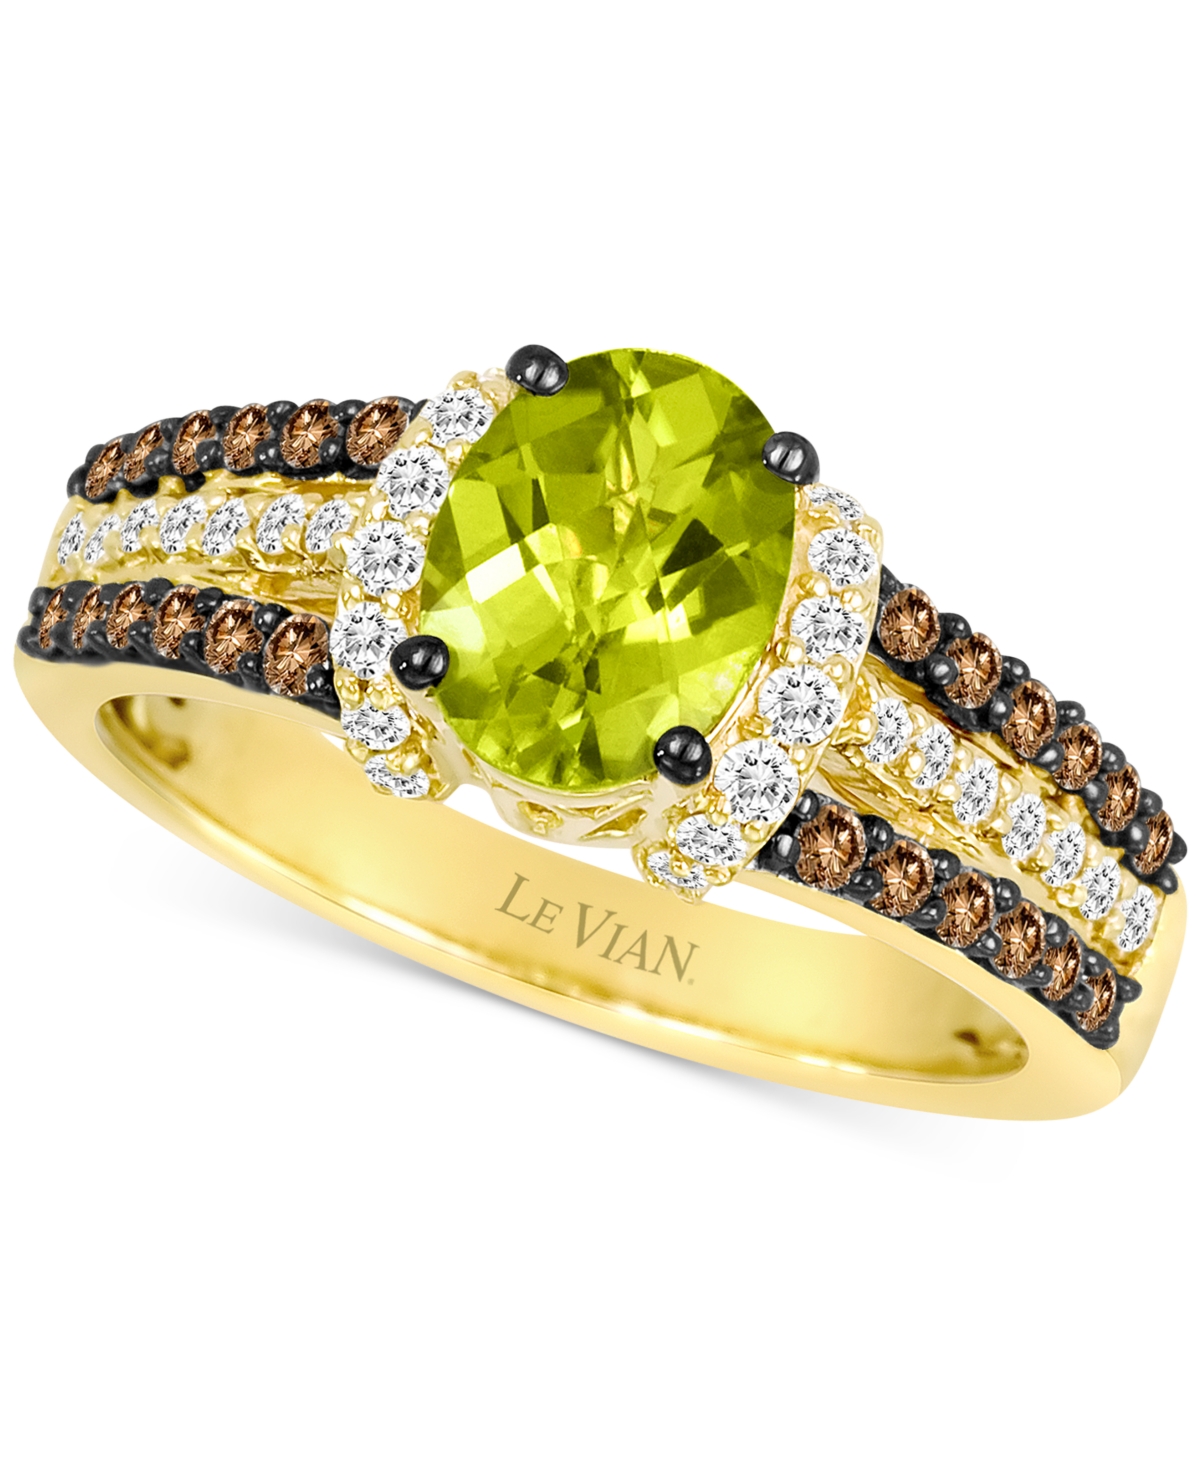 Le Vian Green Apple Peridot (1-1/5 ct. t.w.), Chocolate Diamonds (1/4 ct. t.w) & Vanilla Diamonds (1/4 ct. t.w.) Ring in 14k Yellow Gold